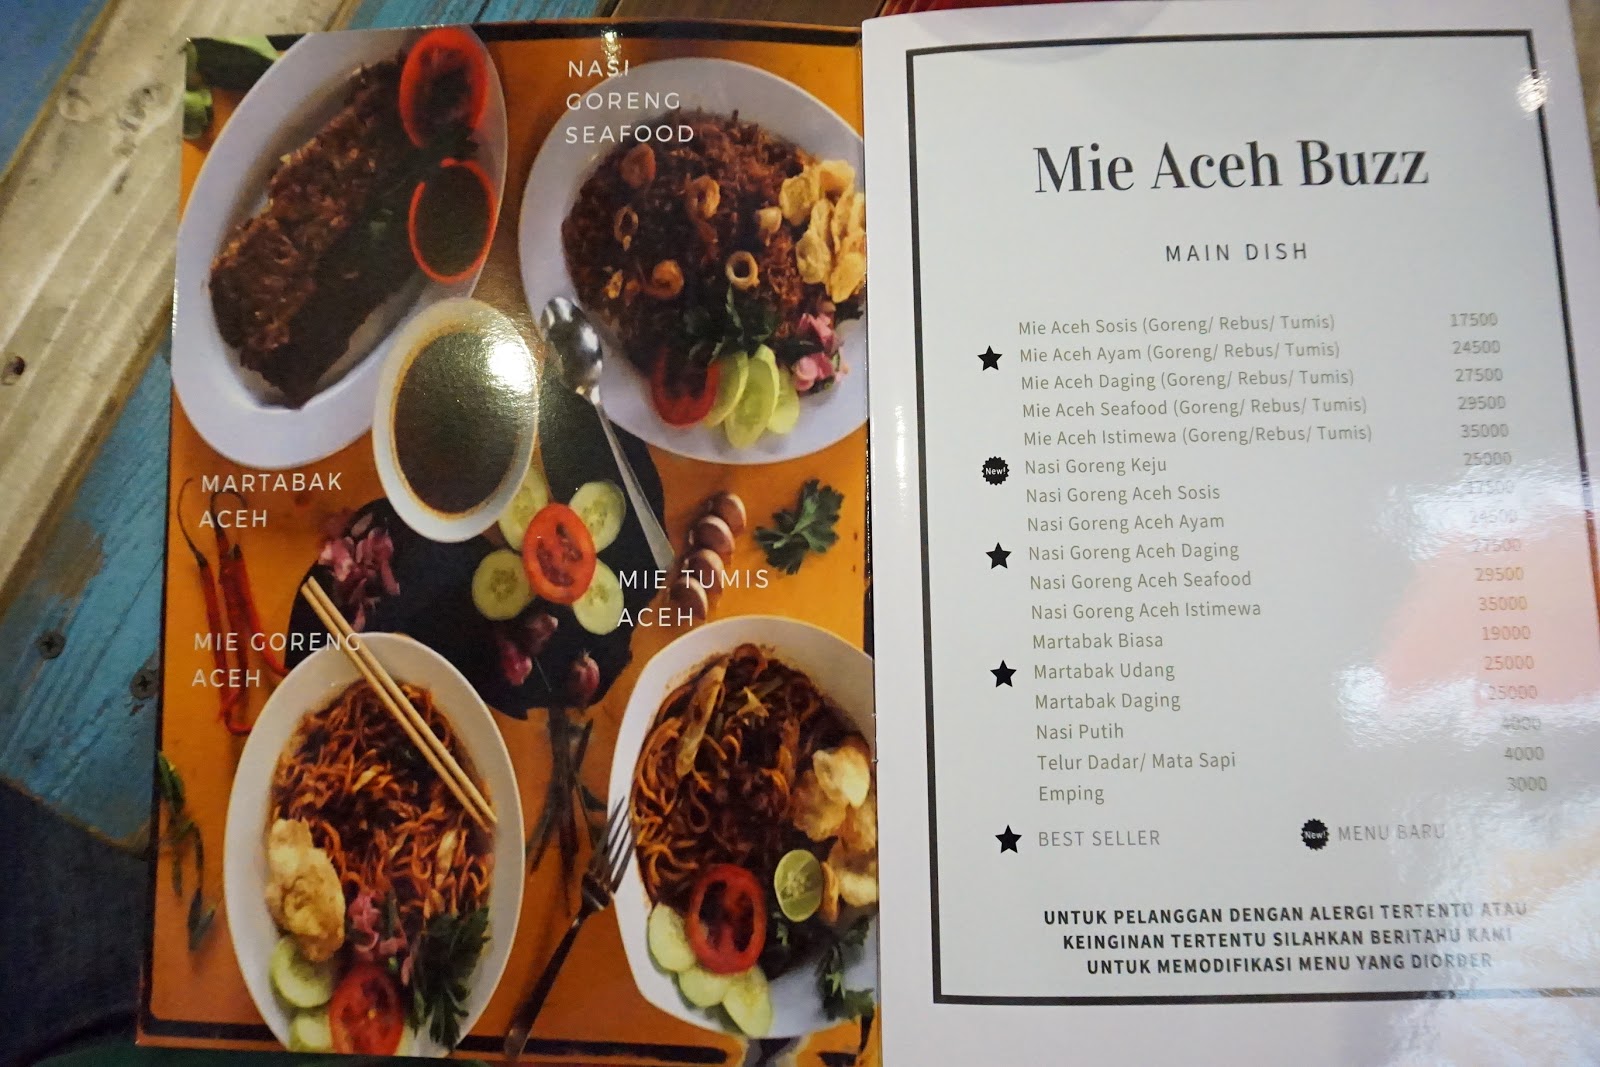 Cari Mie Aceh enak di Bintaro? ke Mie Aceh Buzz saja 